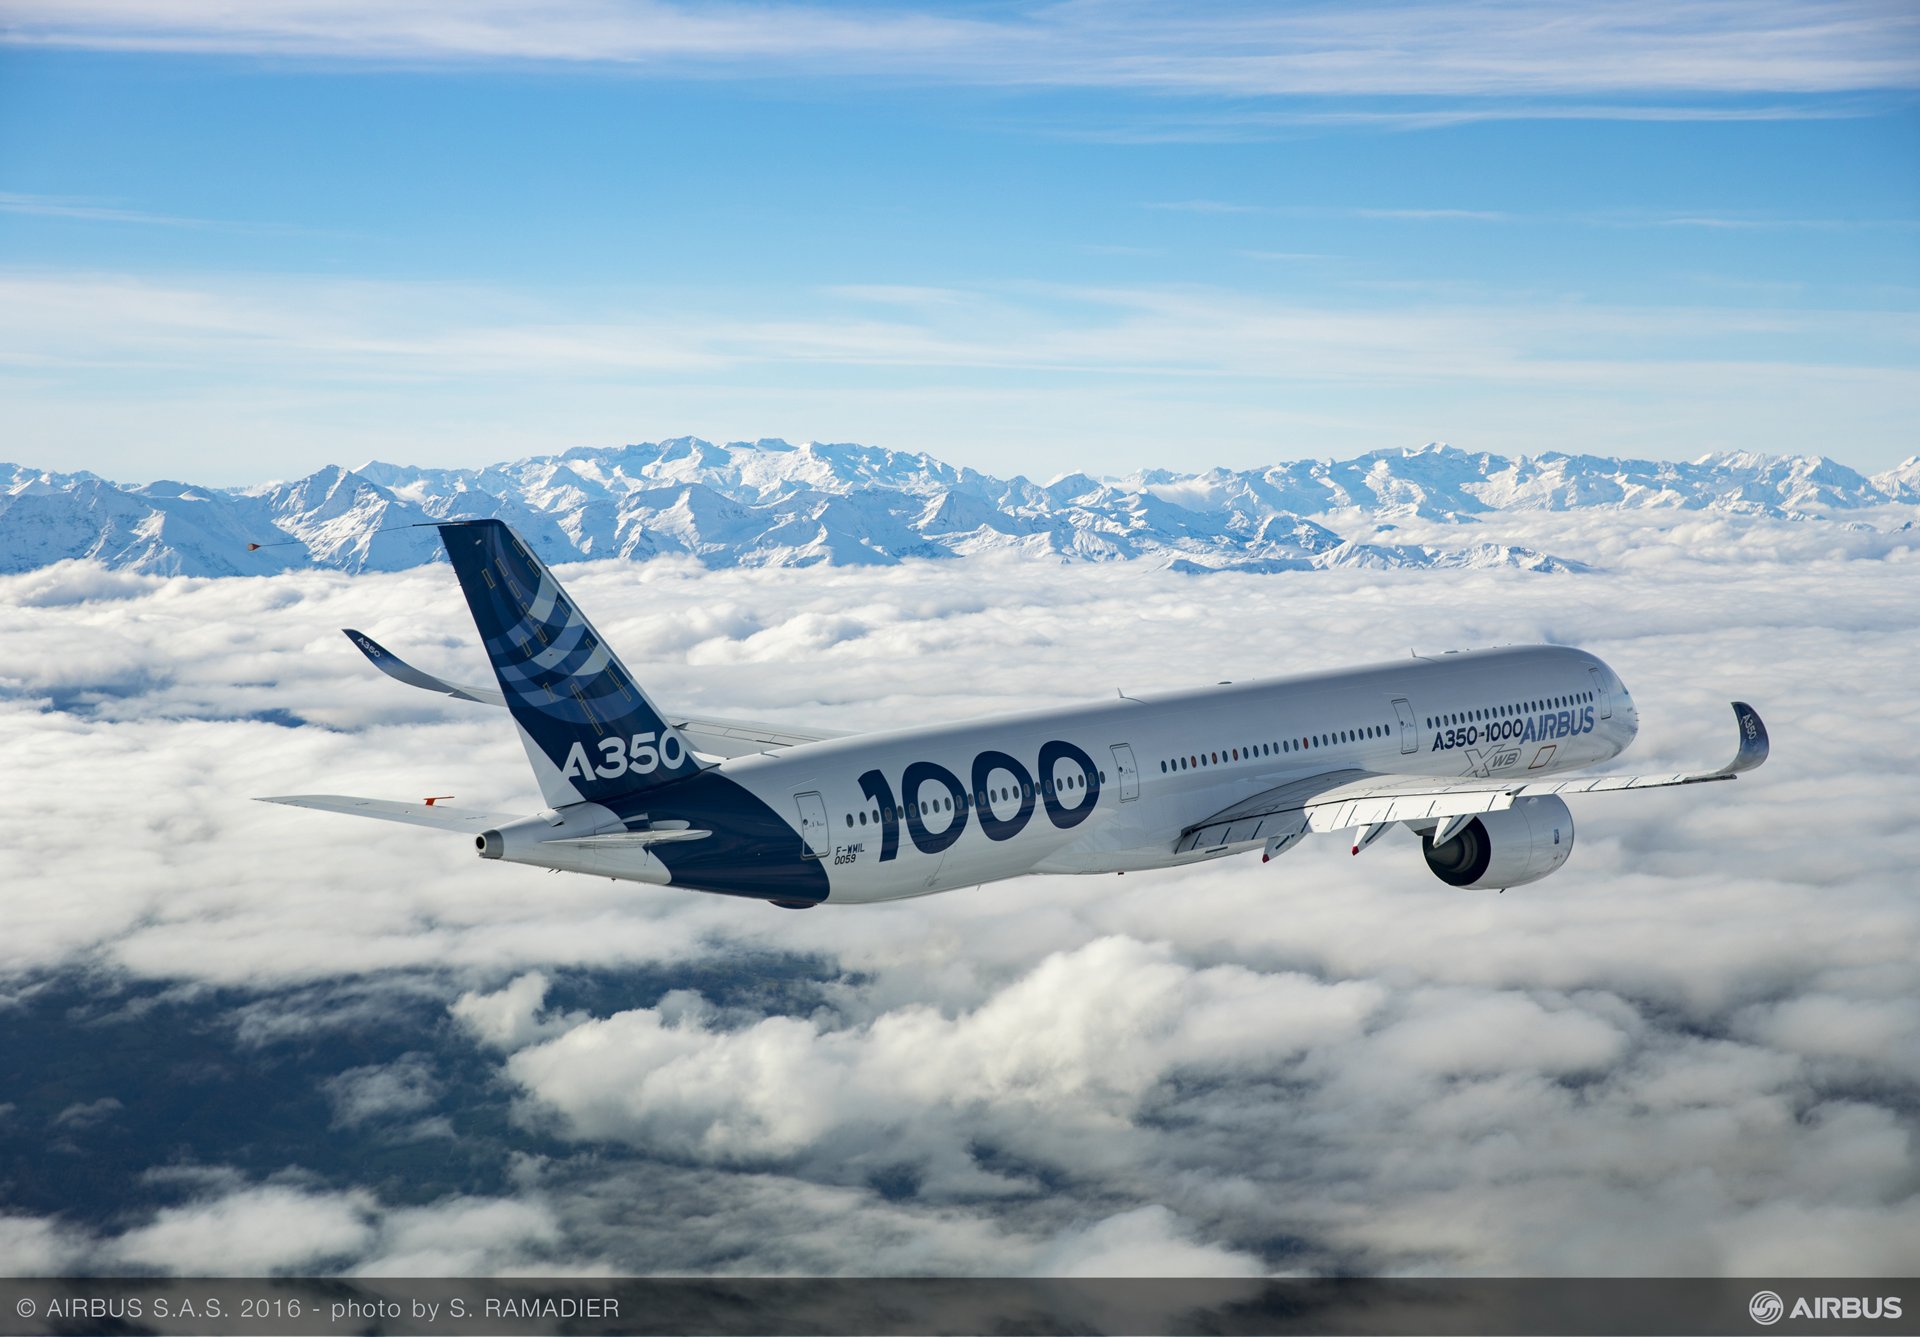 A350 Family Passenger Aircraft Airbus